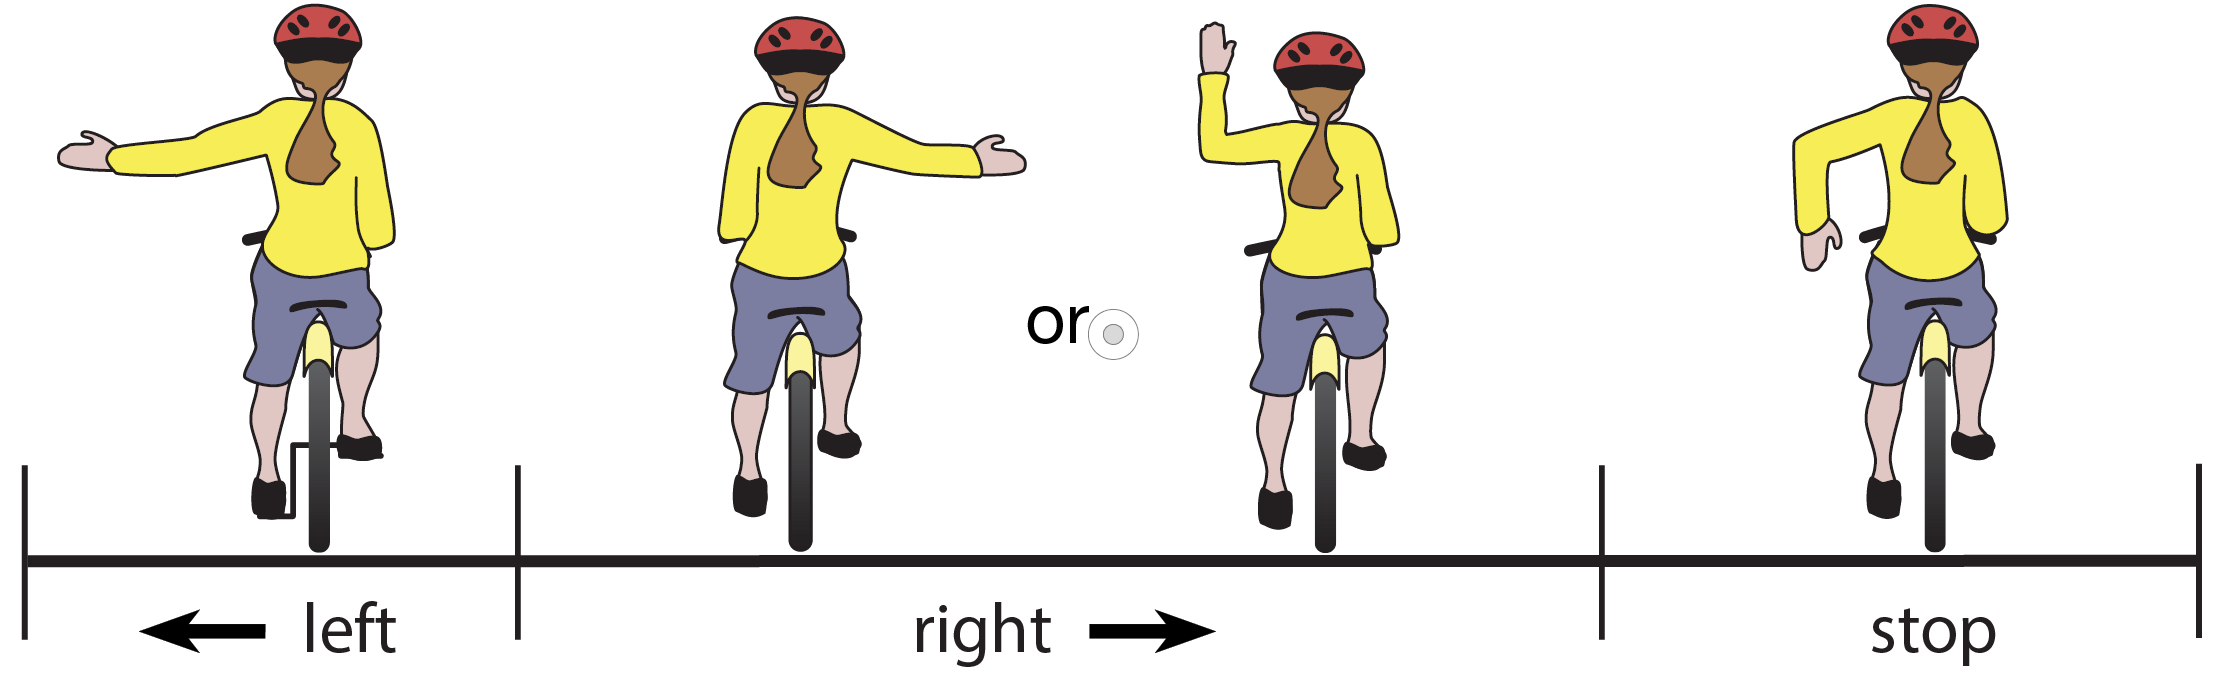 Image - Bicyclist hand signals diagram.